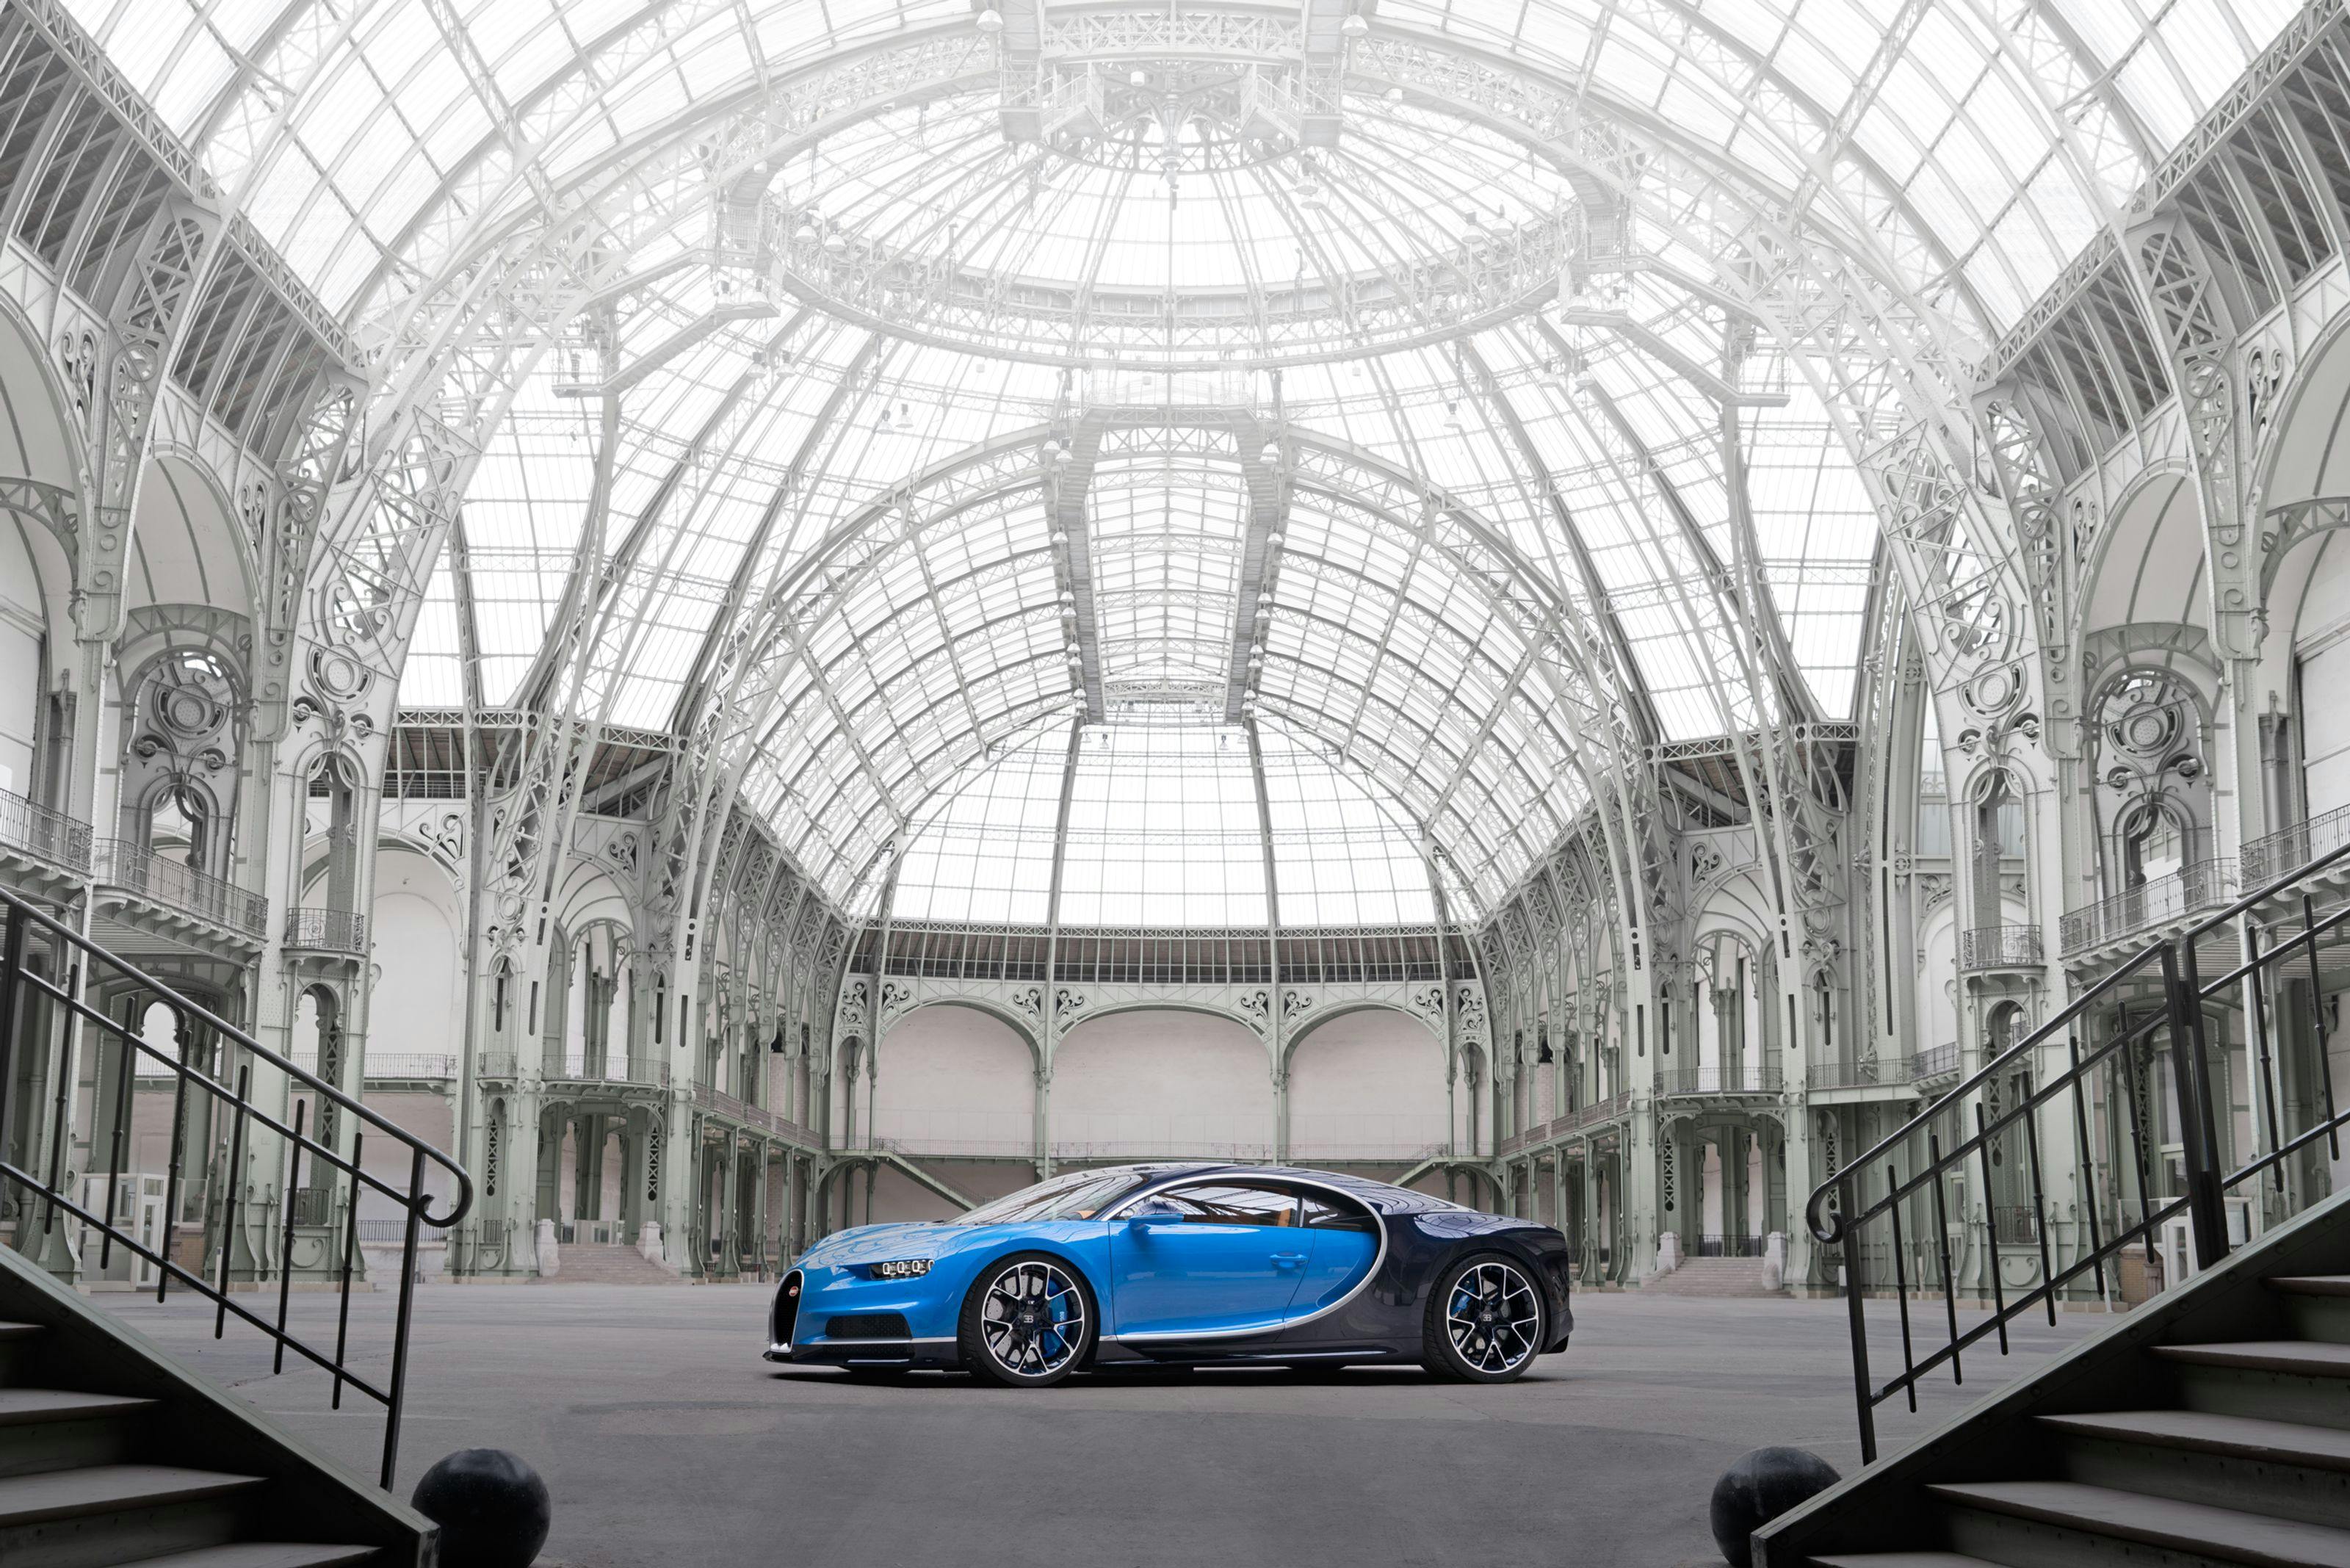 Geneva International Motor Show 2016: Bugatti Chiron – world premiere for the ultimate super sports car